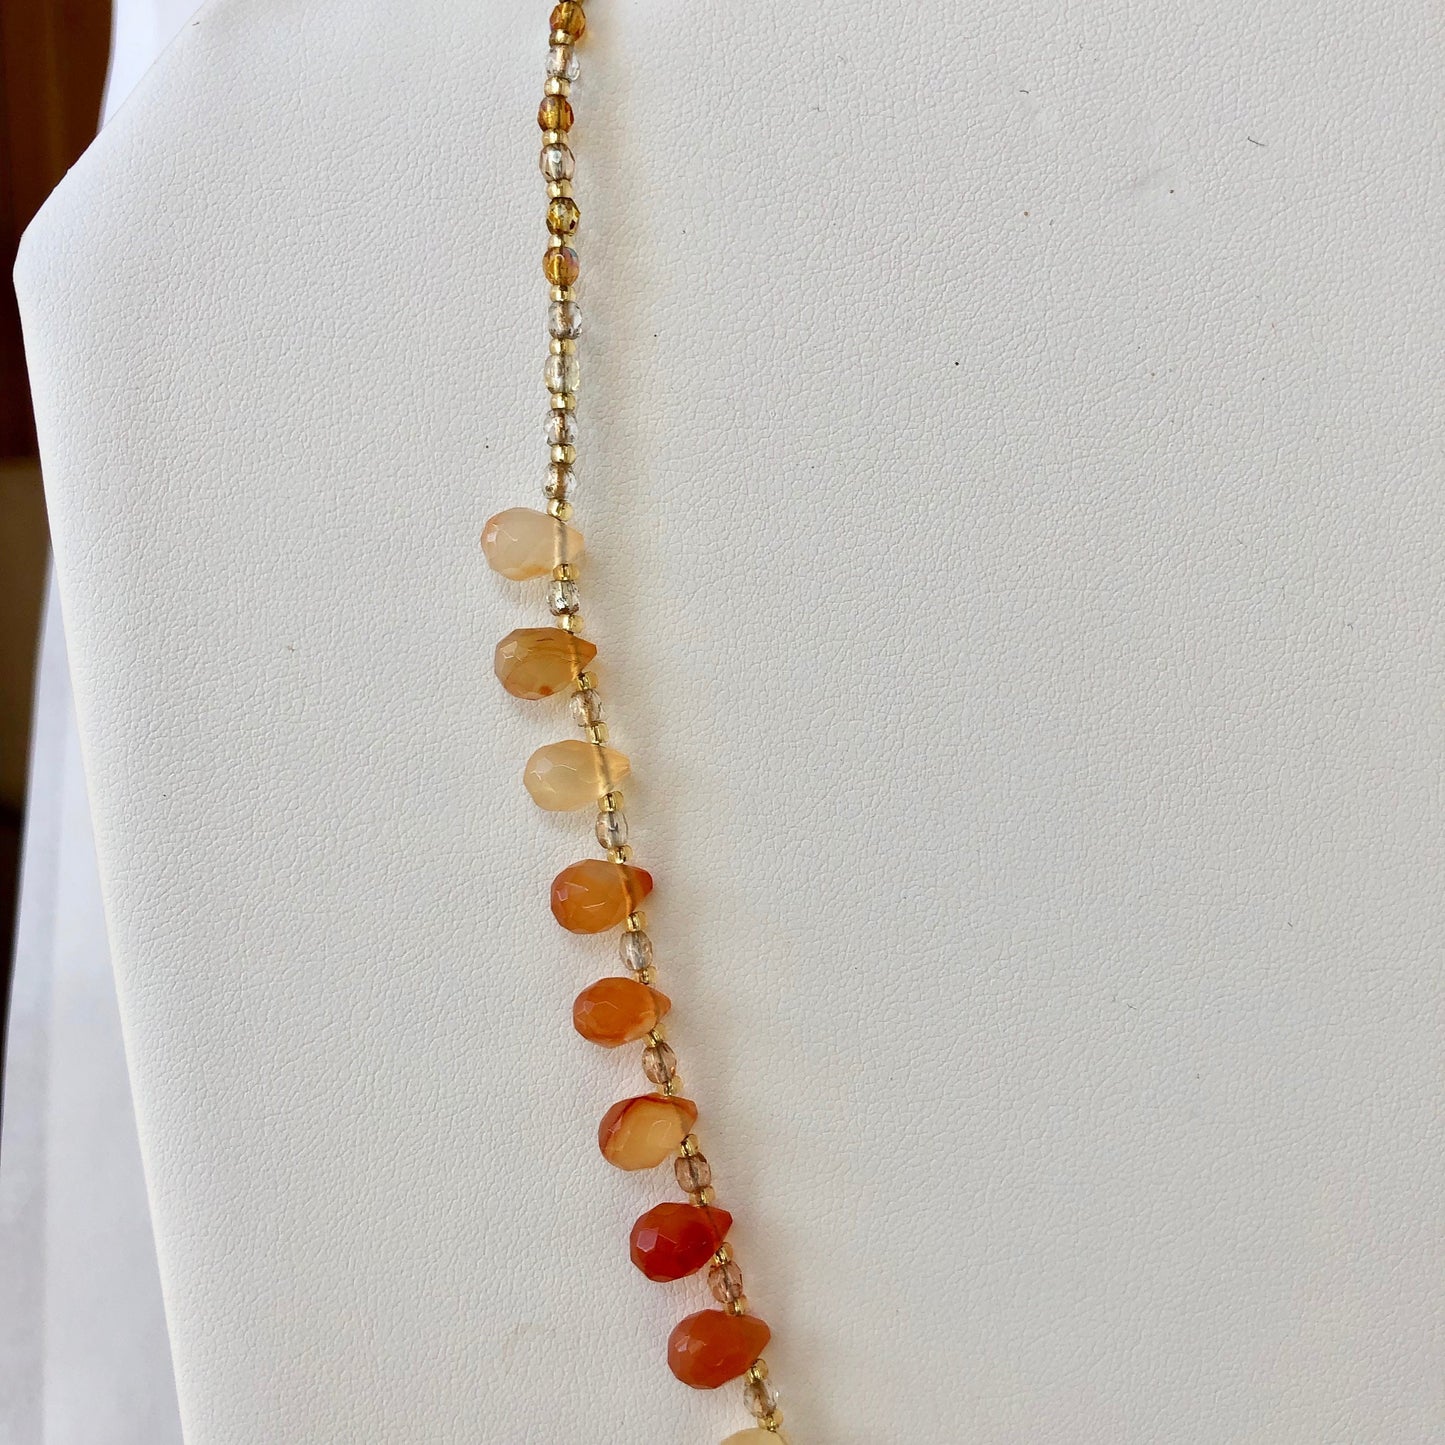 Gorgeous carnelian teardrop necklace. Beautiful rich gemstones adorn this beautiful necklace.